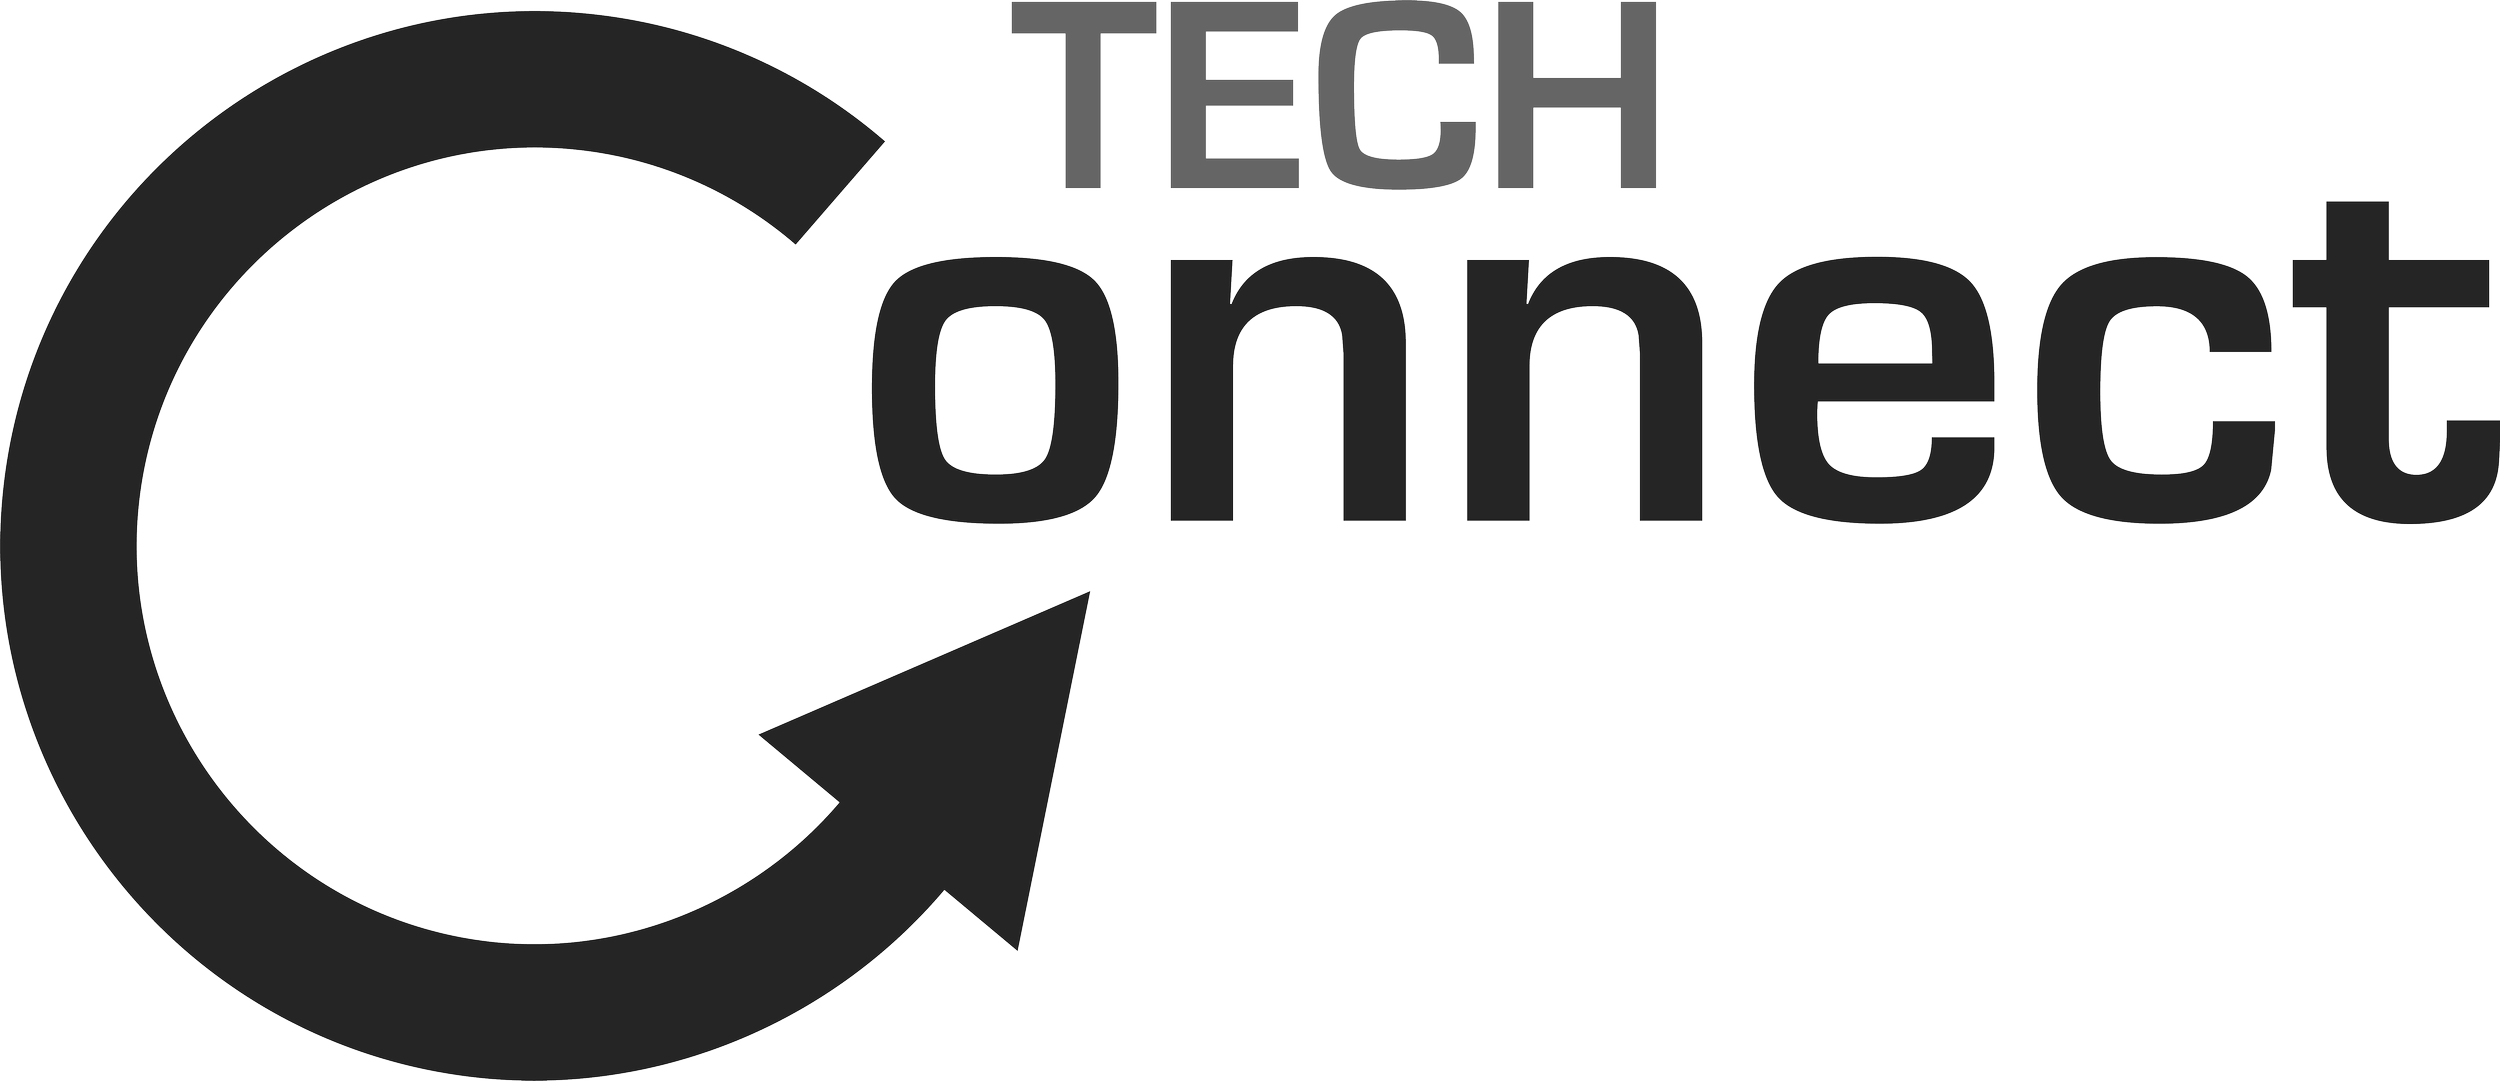 TechConnect-Logo.png